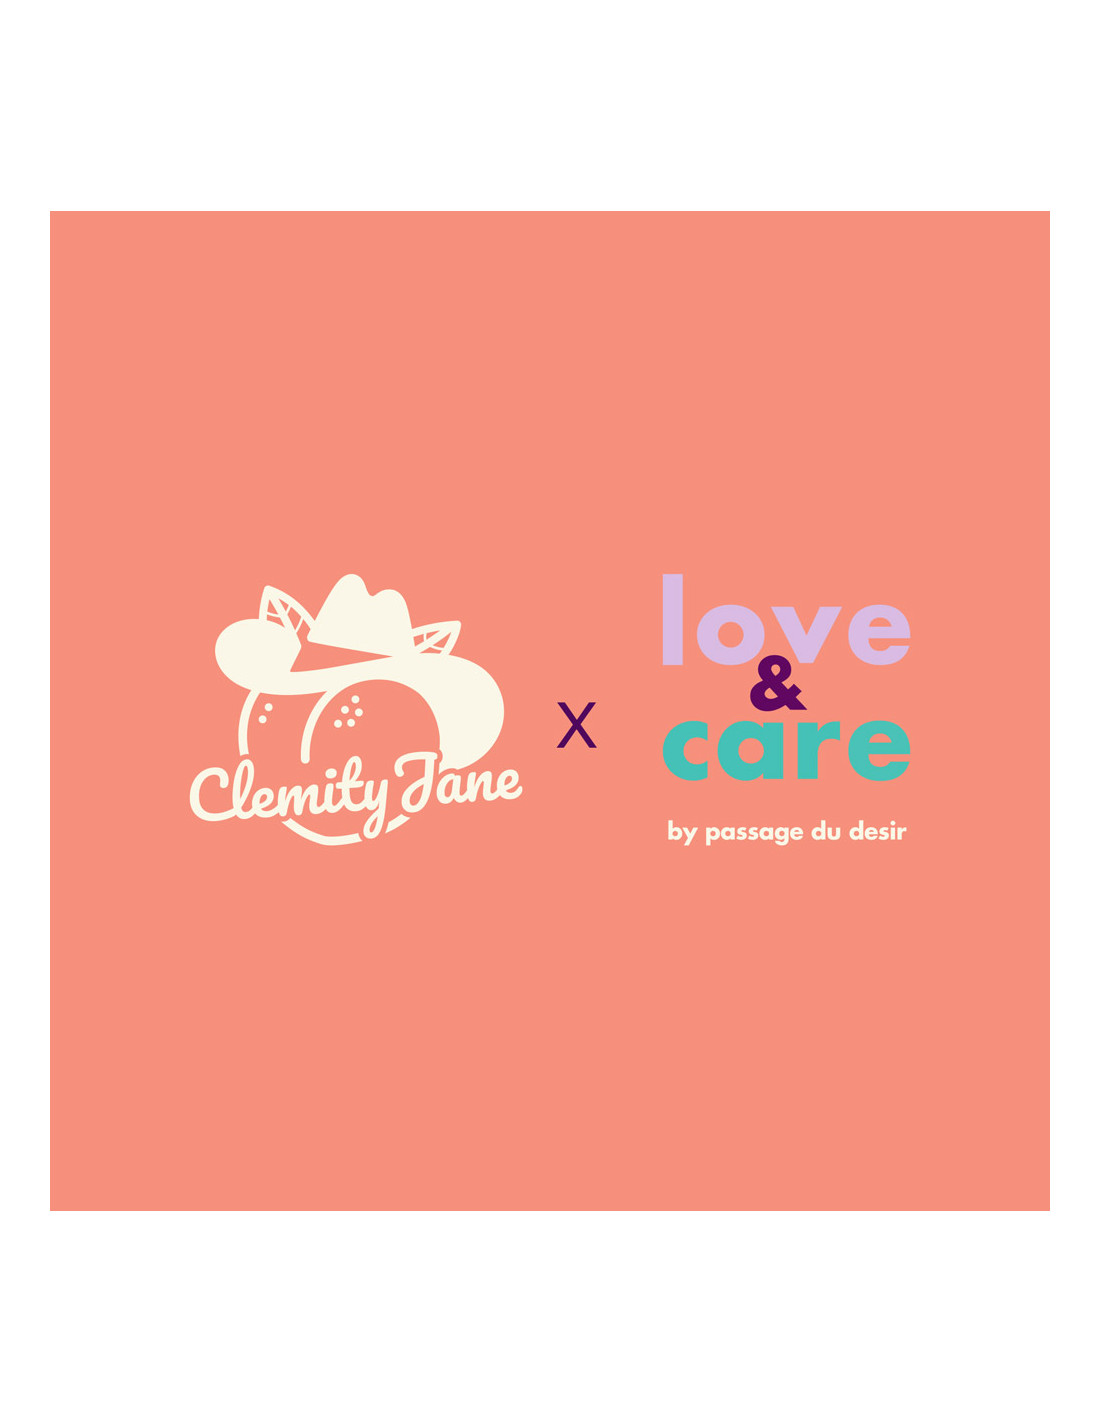 Love and Care La Box Perinee Clemity Jane x Love & Care gaMquwV8